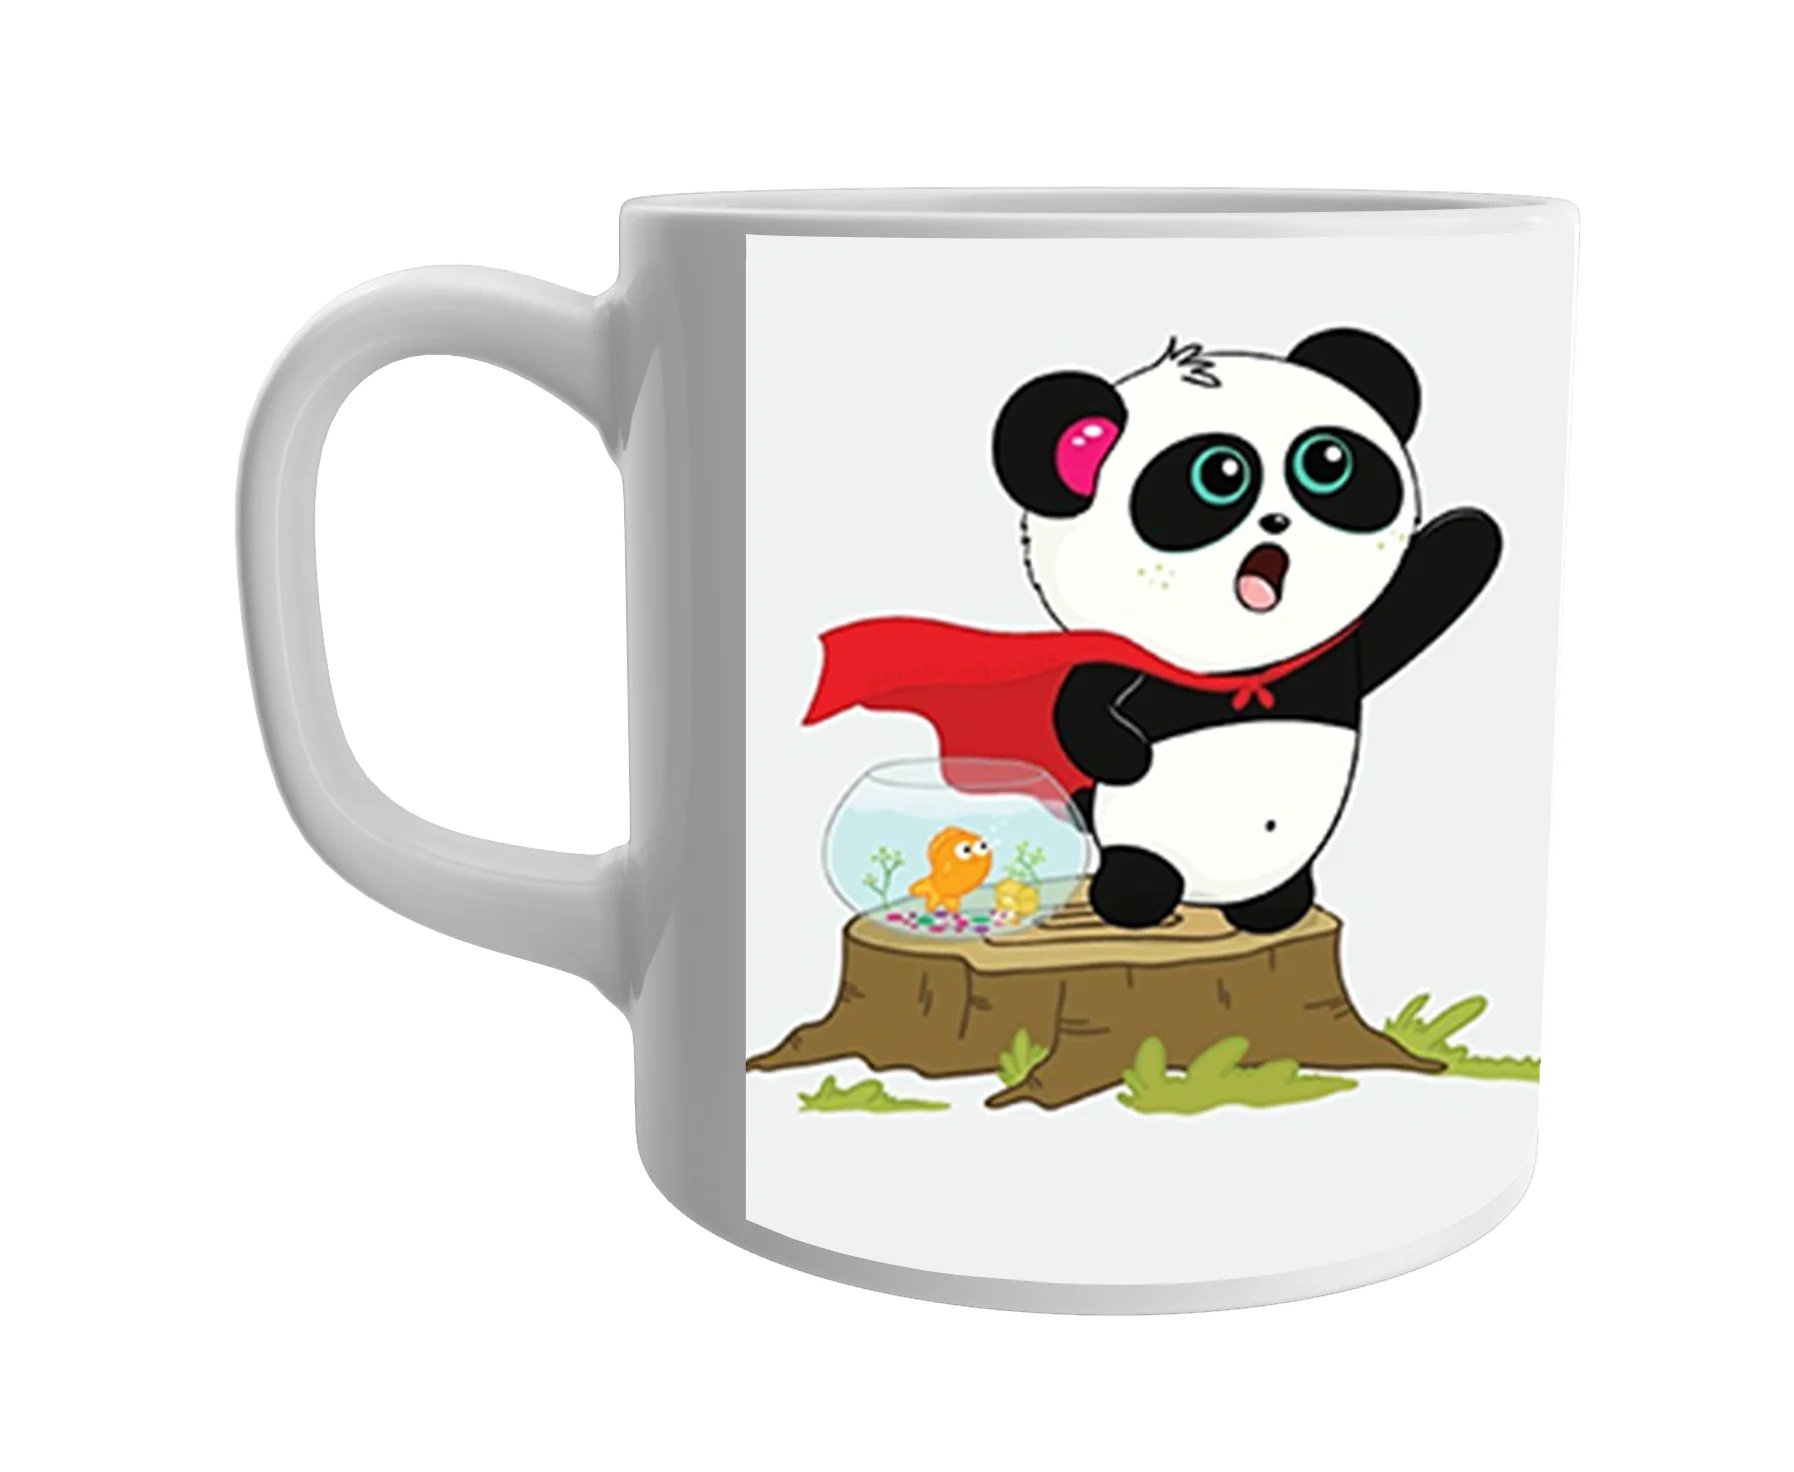 Product Guruji Cute Cartoon Panda Printed White Ceramic Coffee/Tea Mug for Kids.?